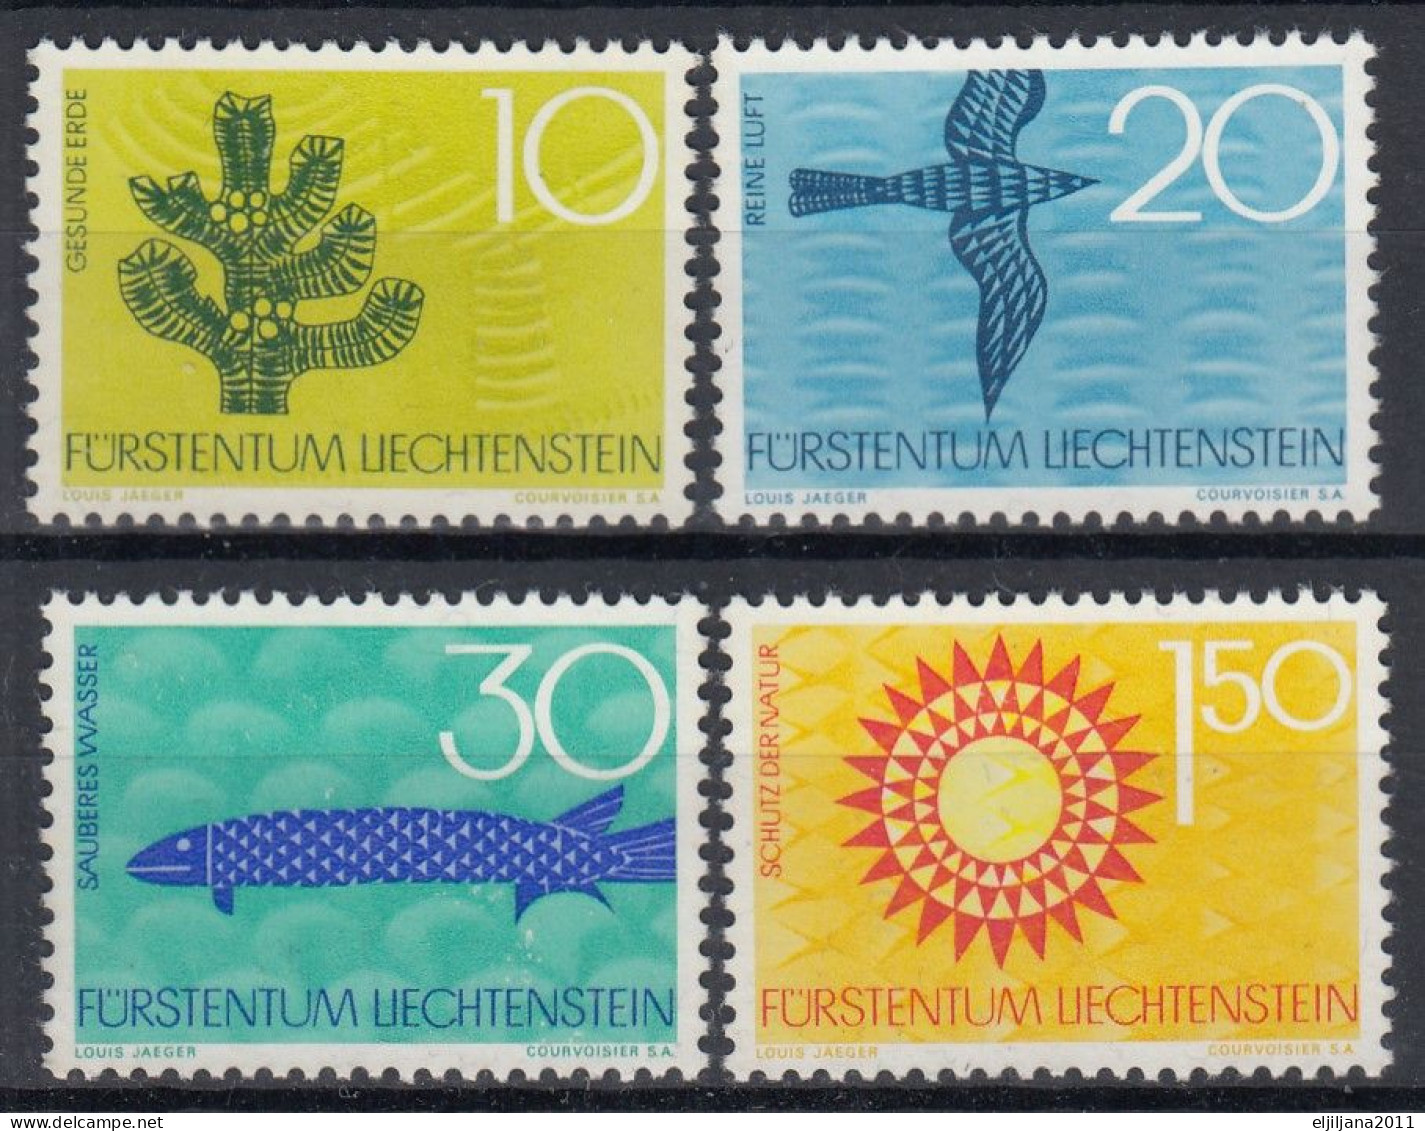 ⁕ Liechtenstein 1939 - 1973 ⁕ collection / lot ⁕ 21v used - see scan